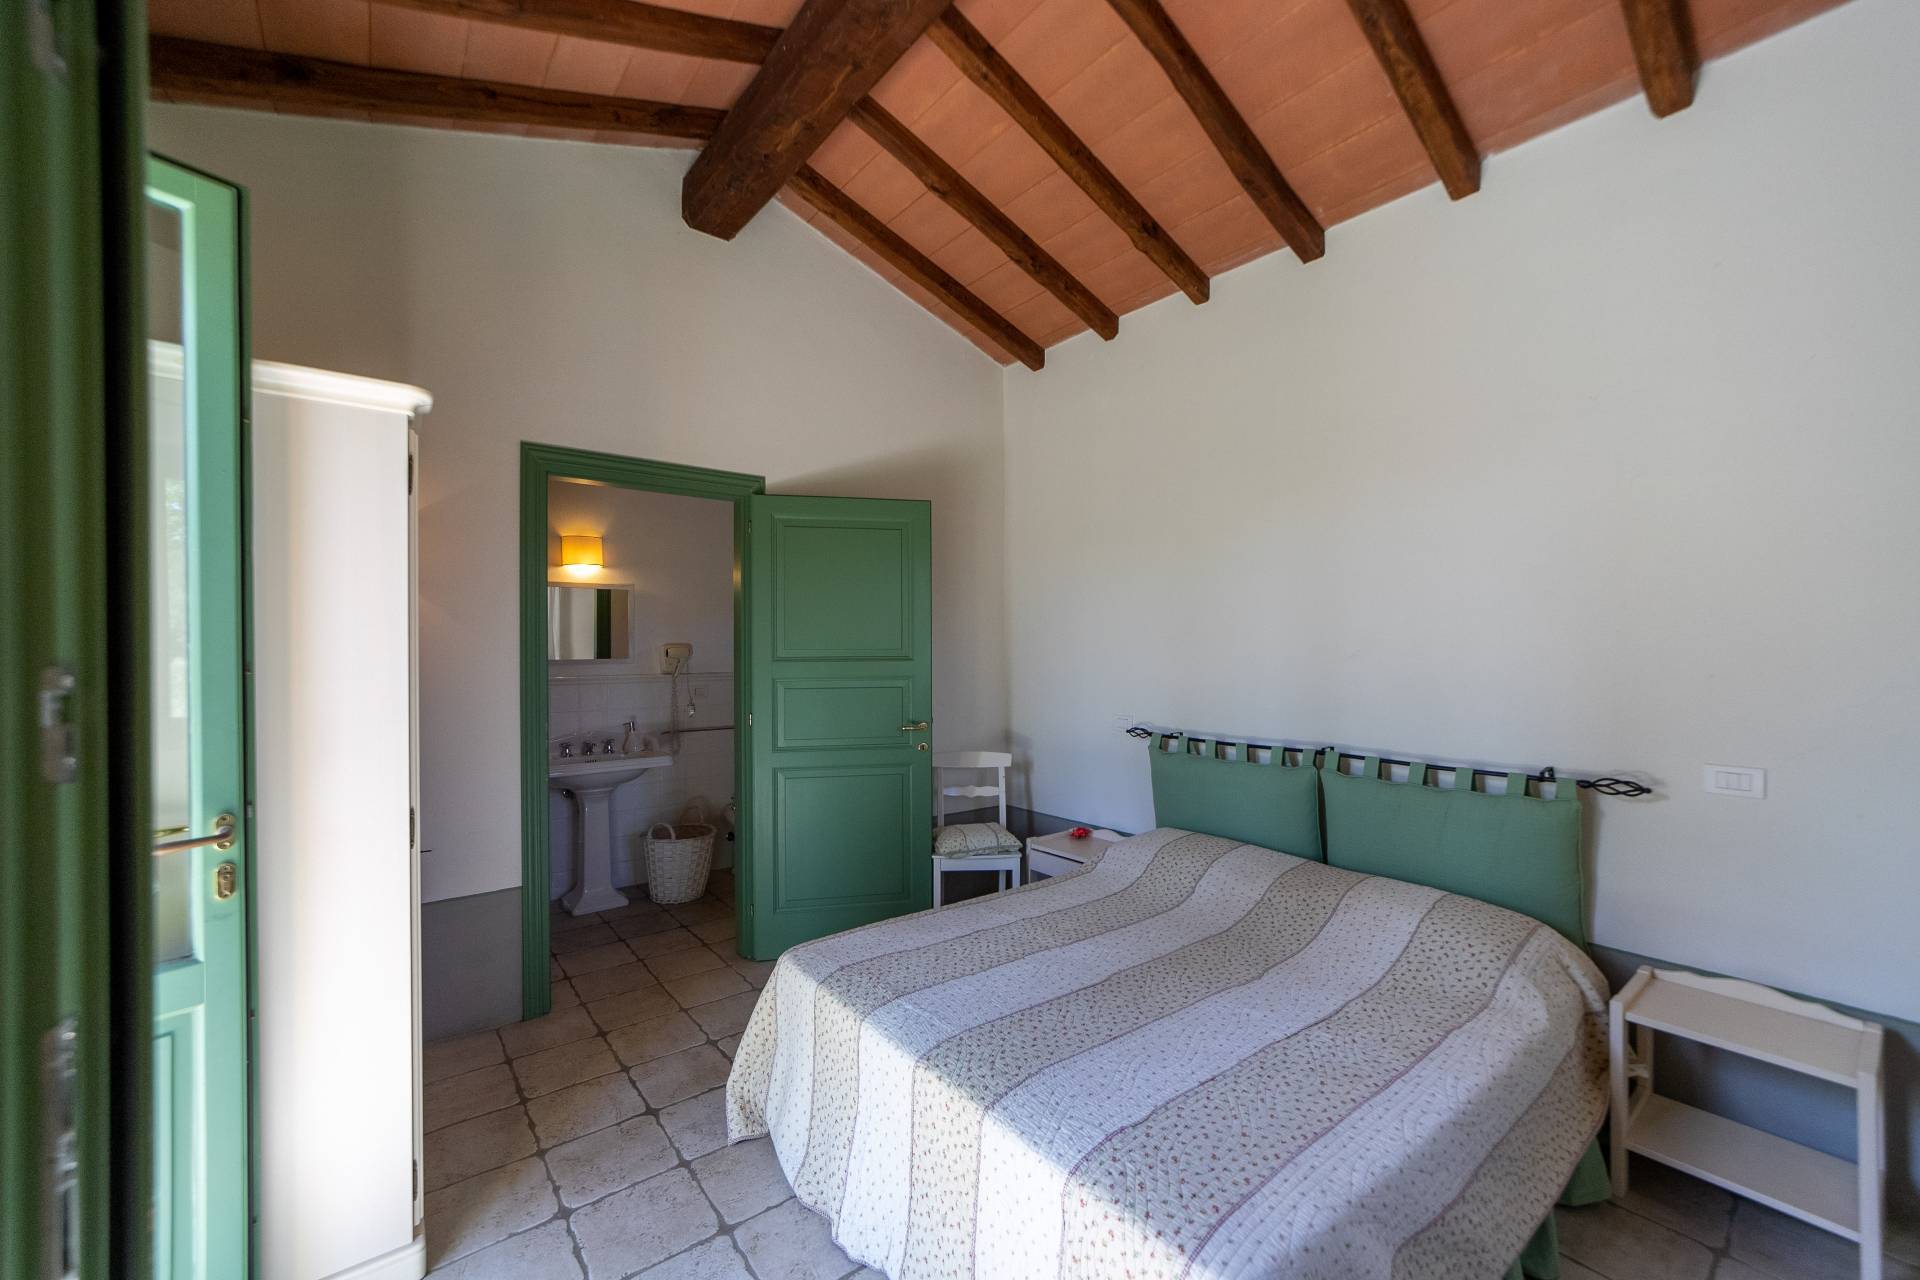 Loc. Fontale, Magliano in Toscana, Grosseto, 58051, IT, 6 Bedrooms Bedrooms, ,8 BathroomsBathrooms,Residential,For Sale,Loc. Fontale,1442740